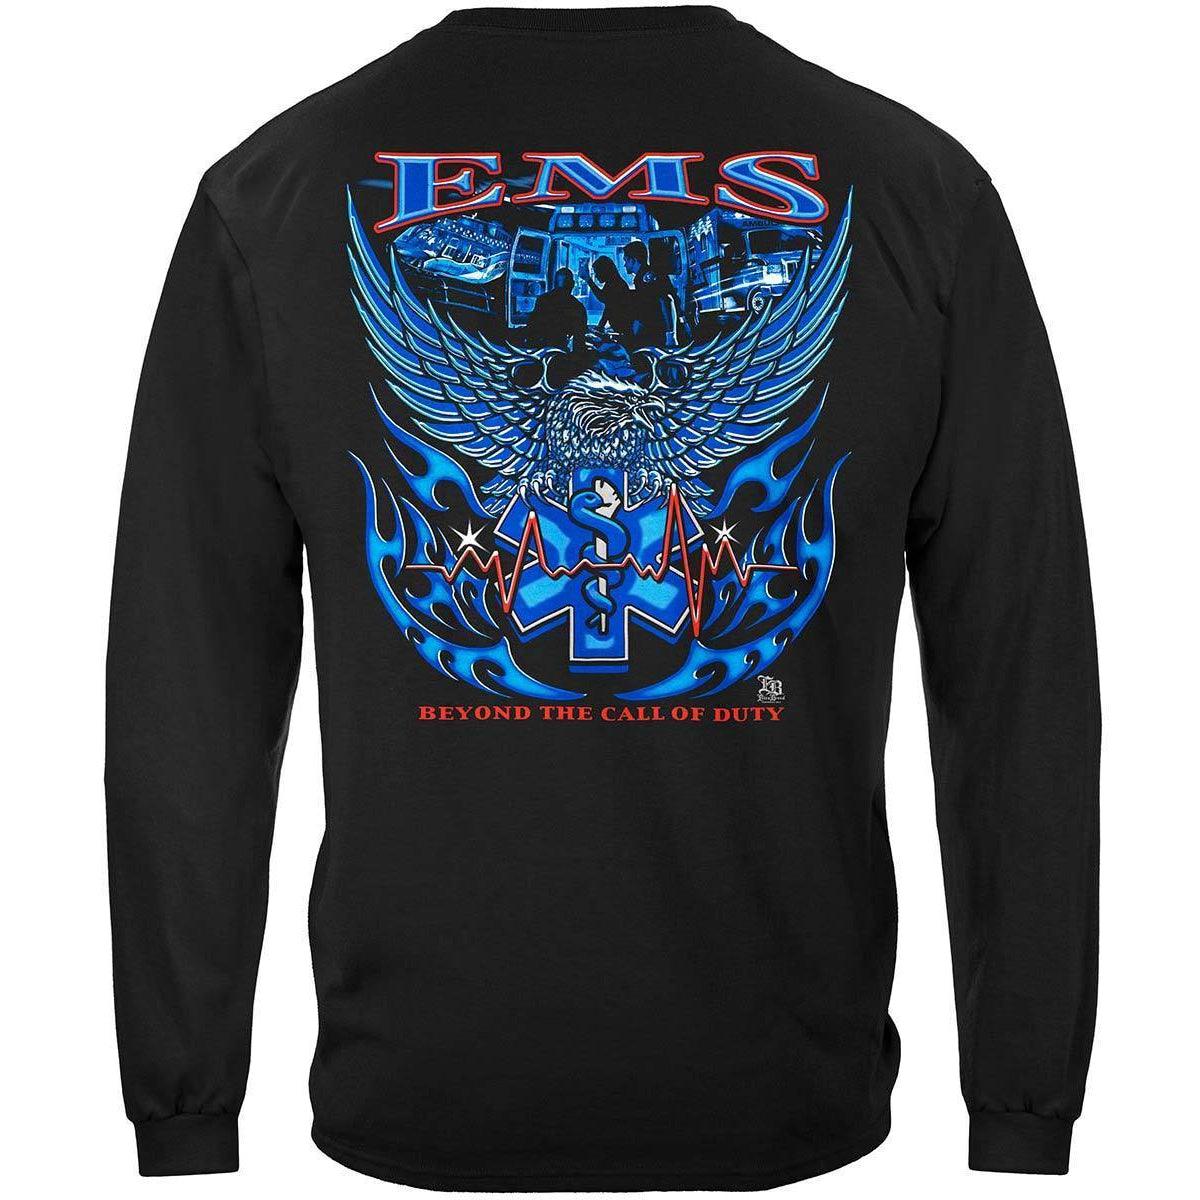 Elite Breed EMS Eagle T-Shirt - Military Republic